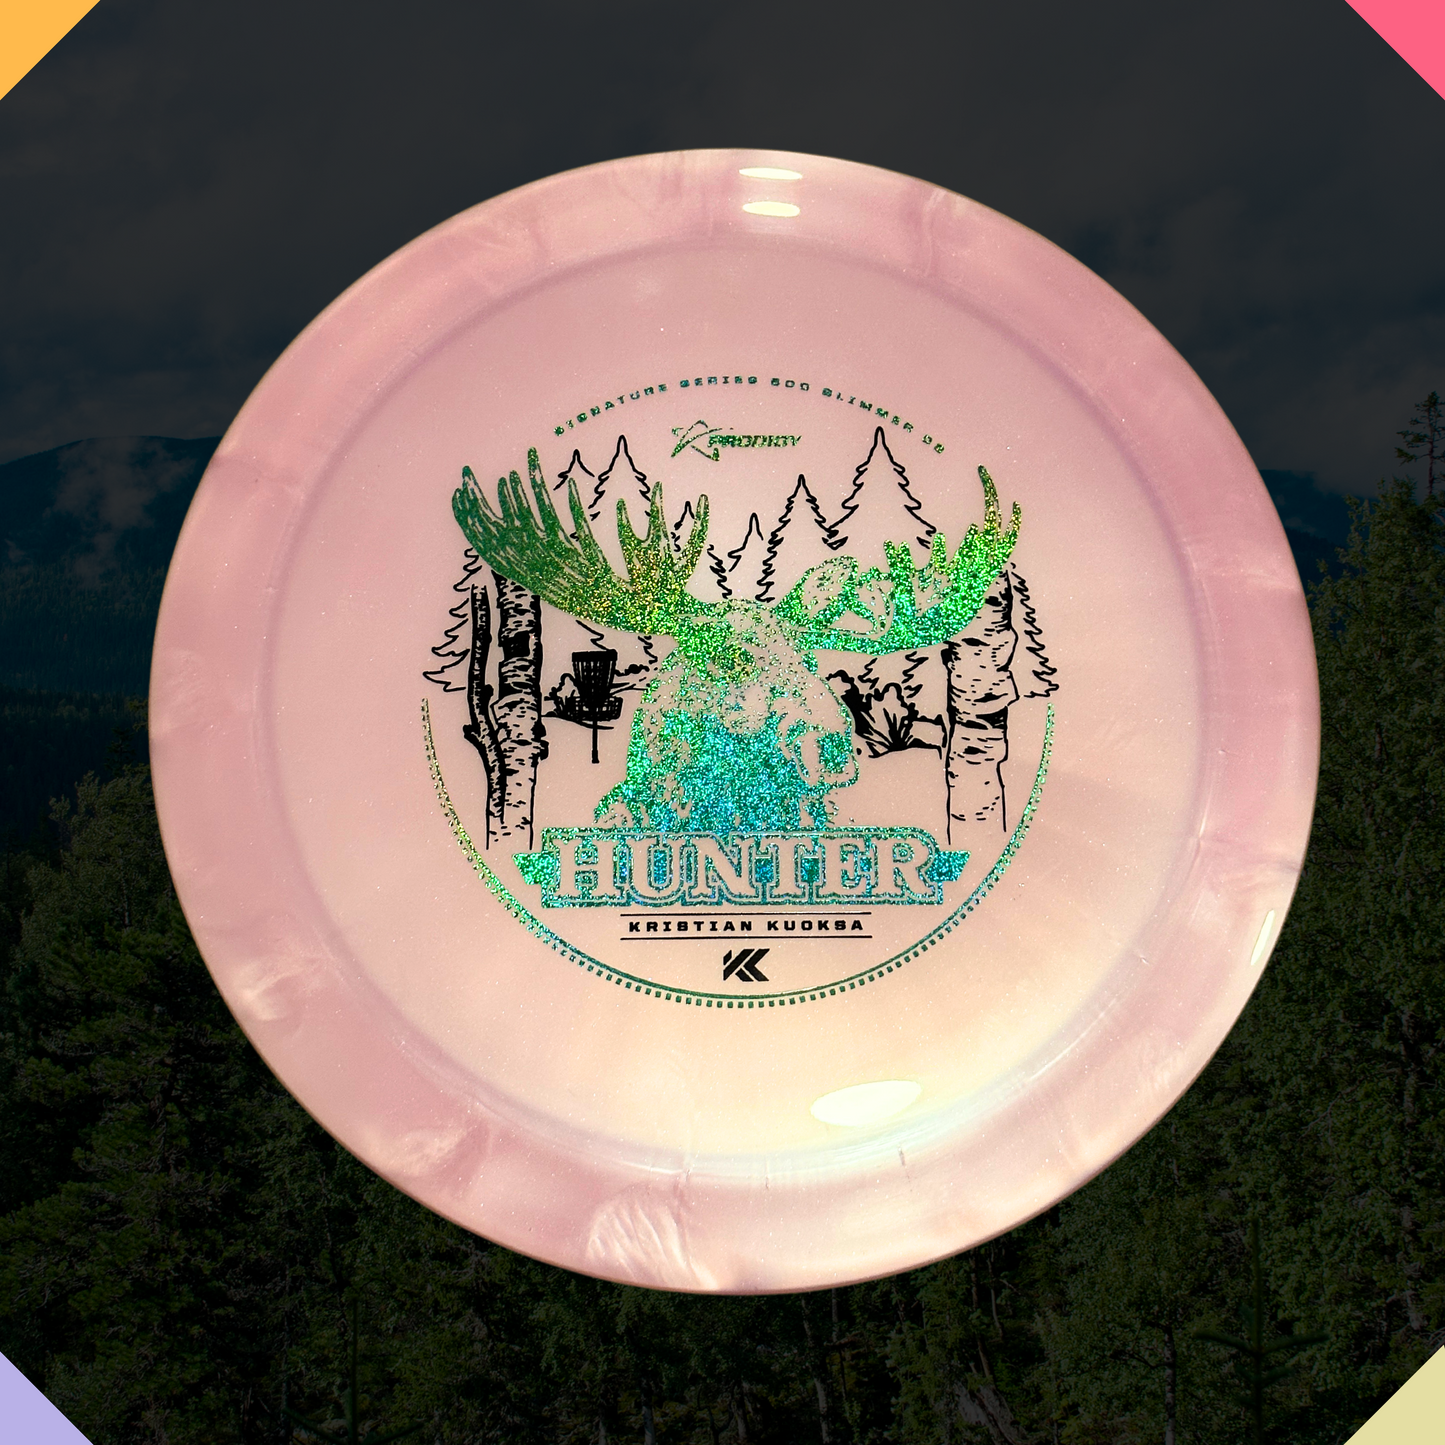 Prodigy Hunter D2 500 Glimmer - Kristian Kuoksa signature series